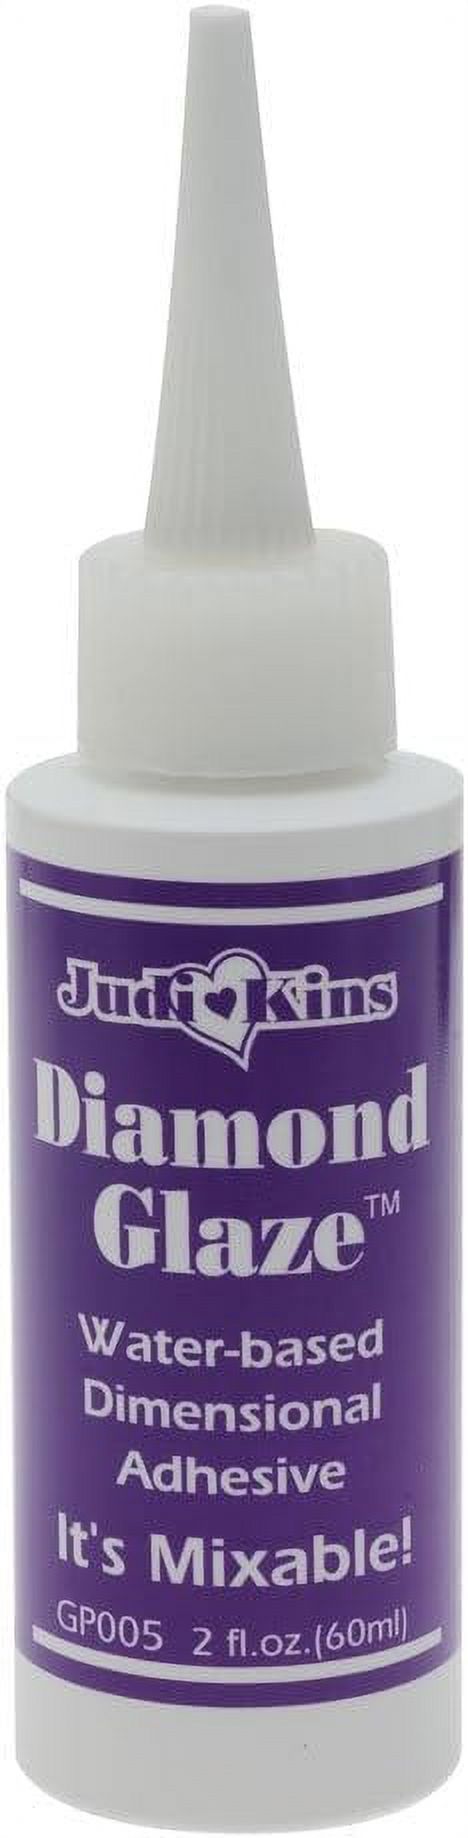 Judikins Diamond Glaze Dimensional Adhesive 2oz-Precision Tip - image 1 of 2